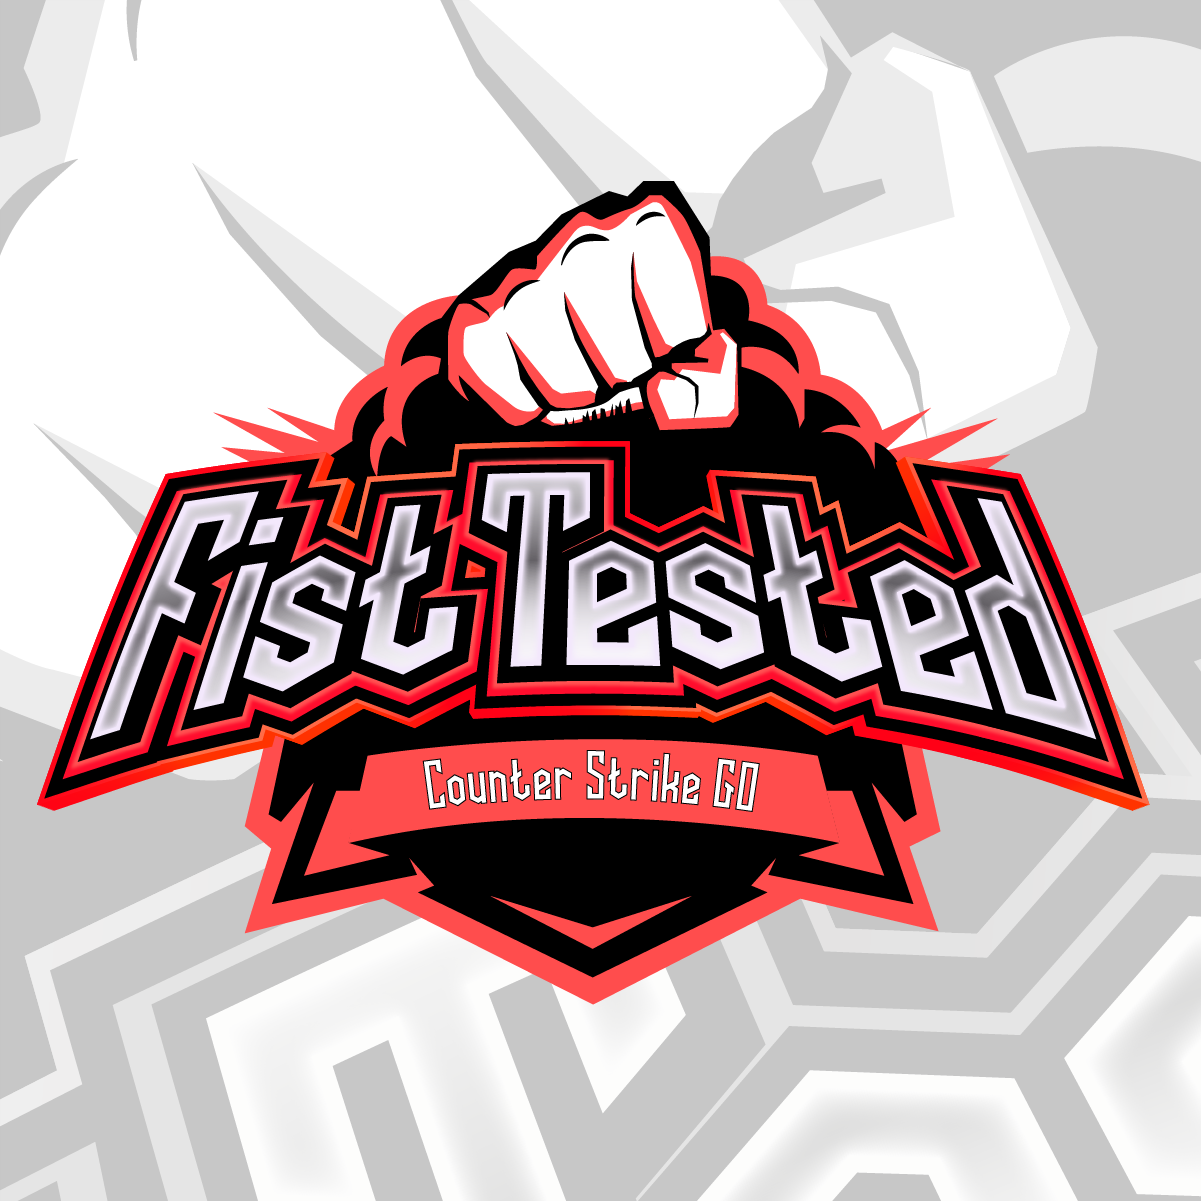 Fist Tested team logo